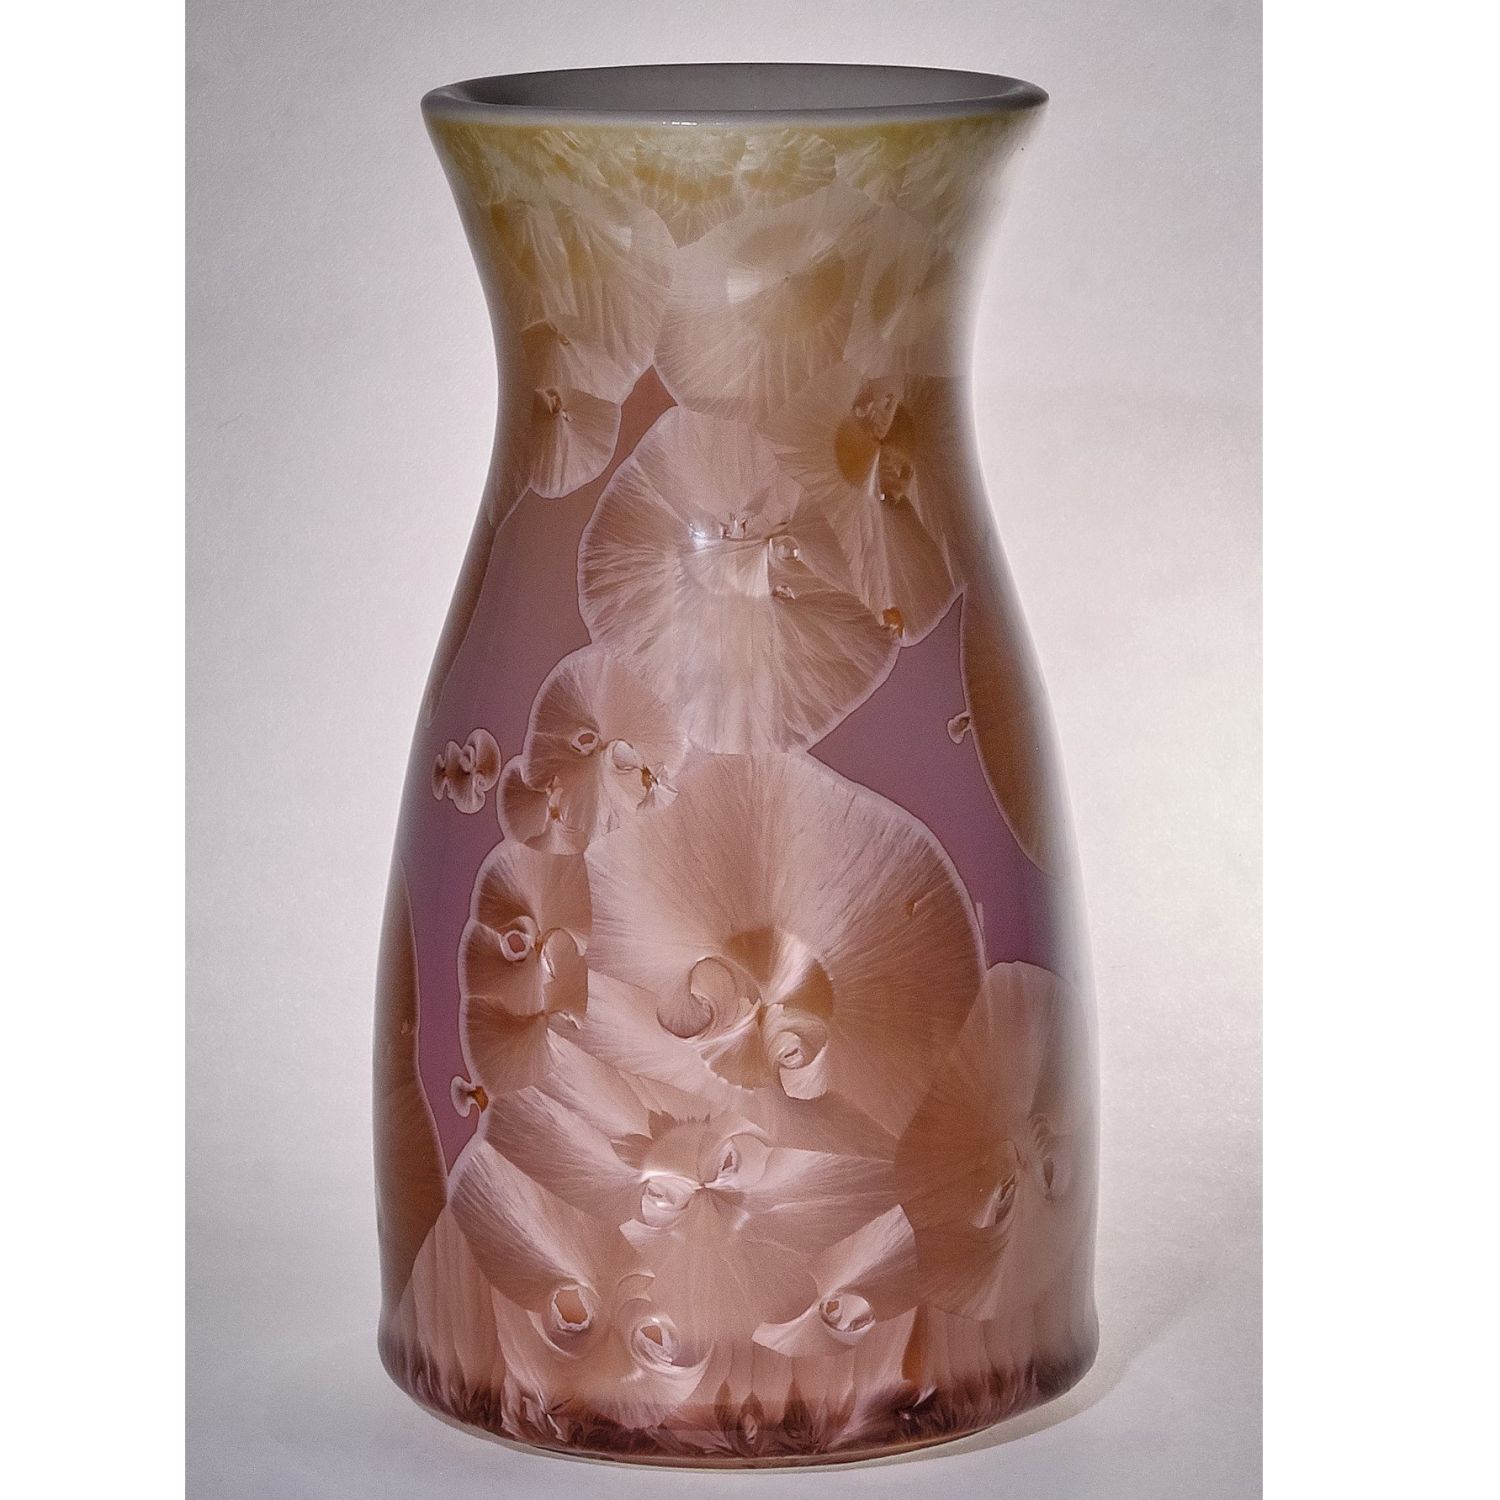 Yumiko Katsuya: Dark Pink Vase Product Image 1 of 1